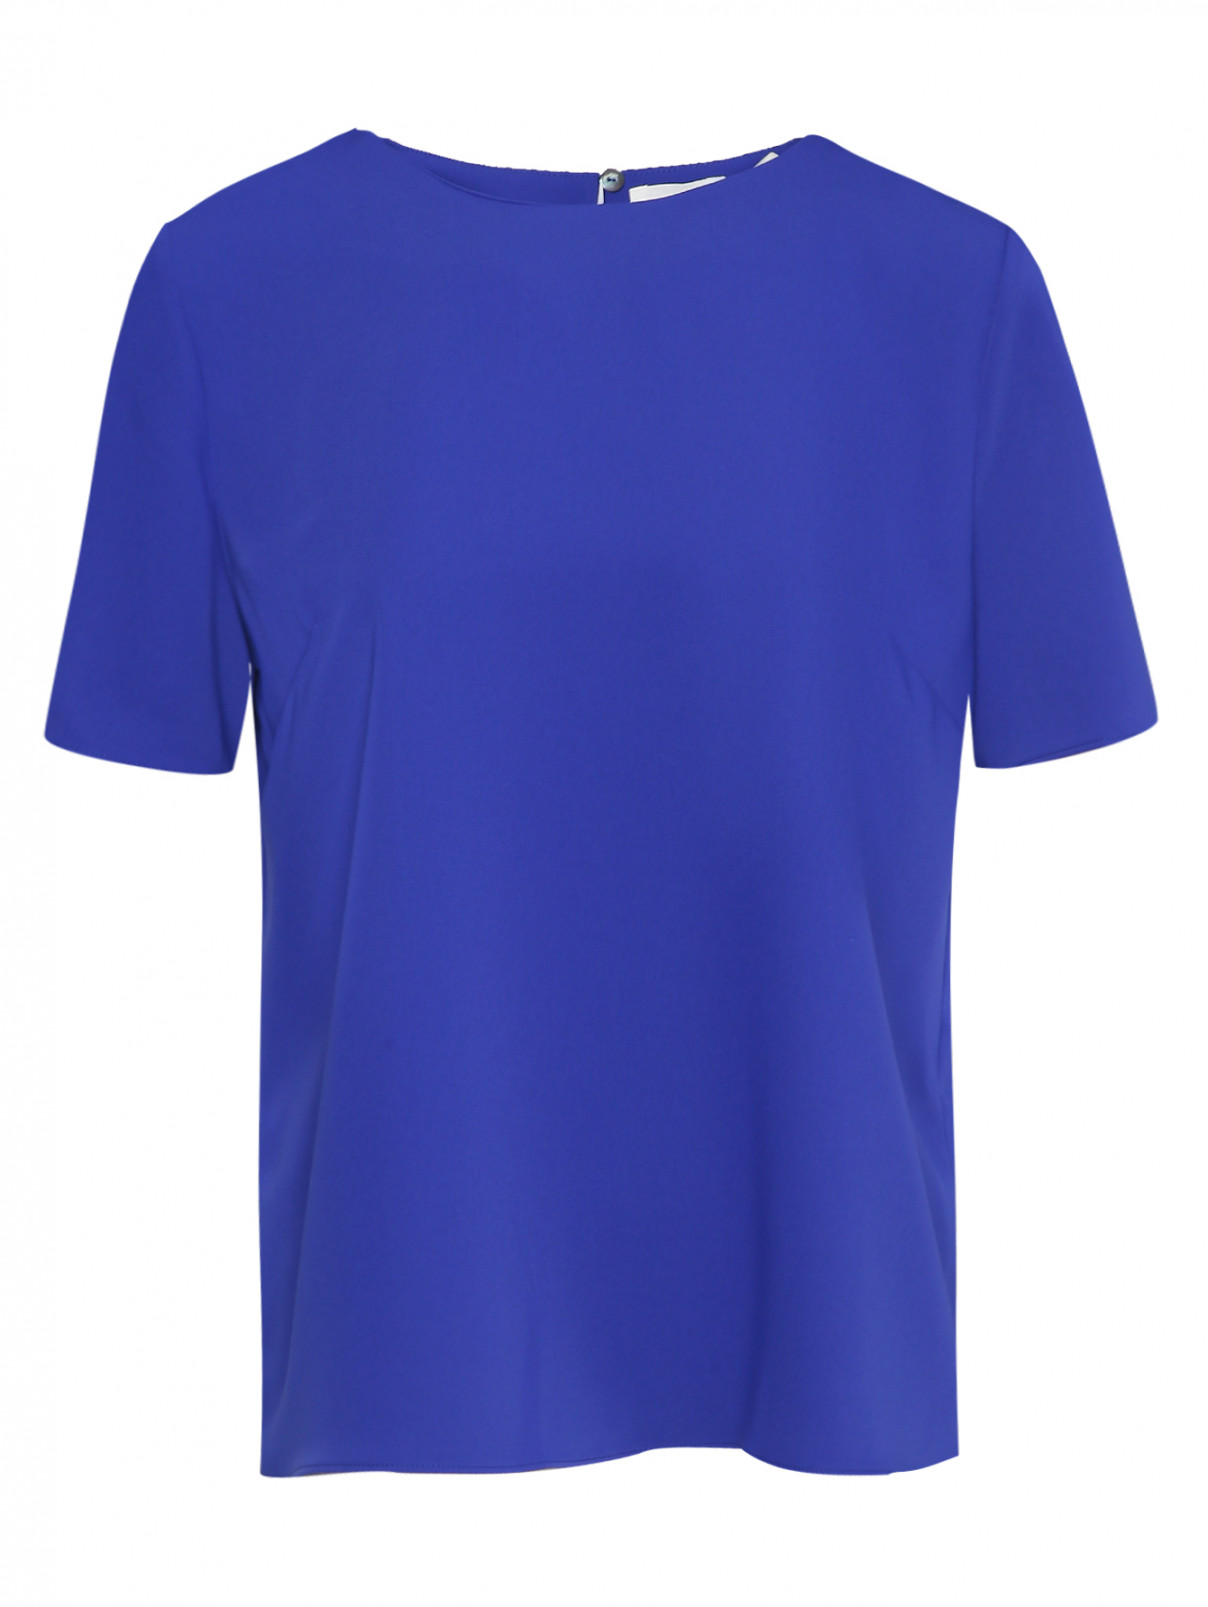 Однотонная блуза с короткими рукавами P.A.R.O.S.H.  –  Общий вид  – Цвет:  Синий